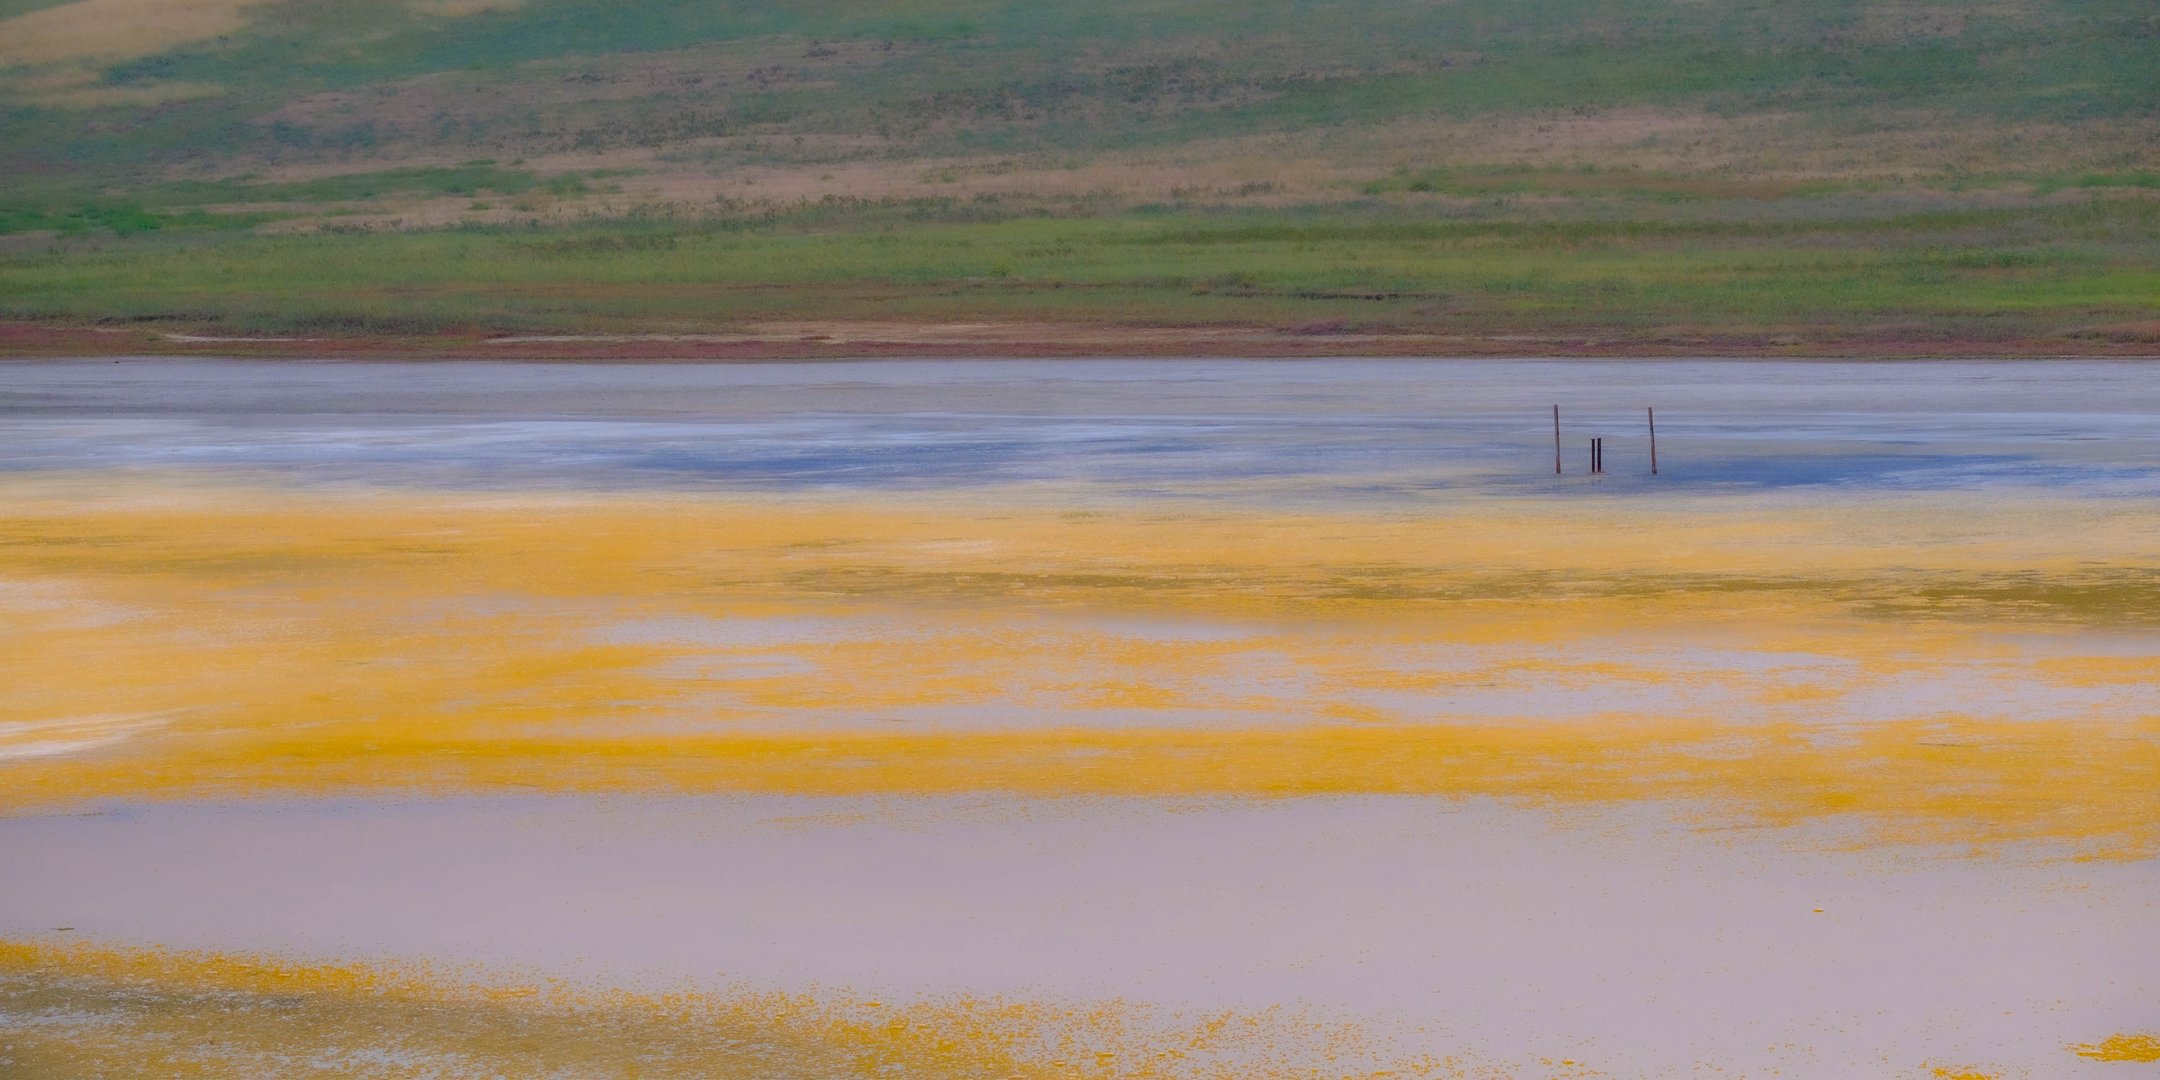 Salzsee von Sakhare / Sakhare salt lake